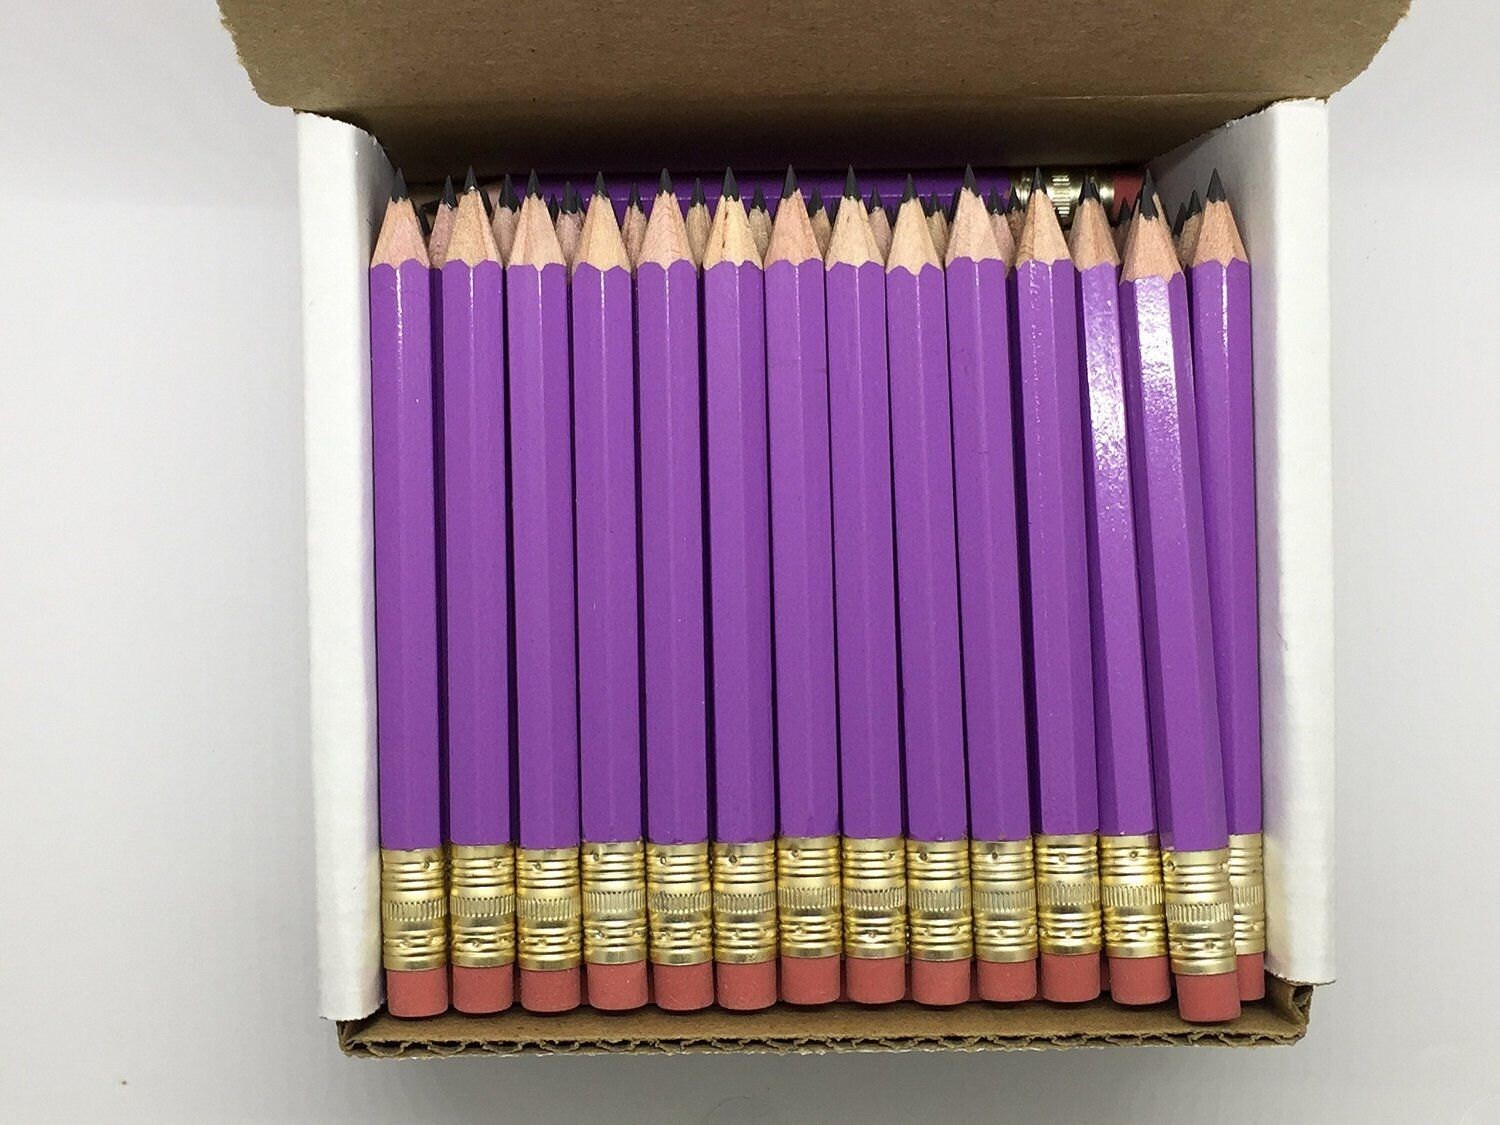  Lápices con goma de borrar – Golf, bolsillo, aula, Pew, corto,  Mini, pequeño, no tóxico – hexágono, afilado, 2 lápices, color natural  desnudo, caja de 144, (1 grande) lápiz de golf : Productos de Oficina